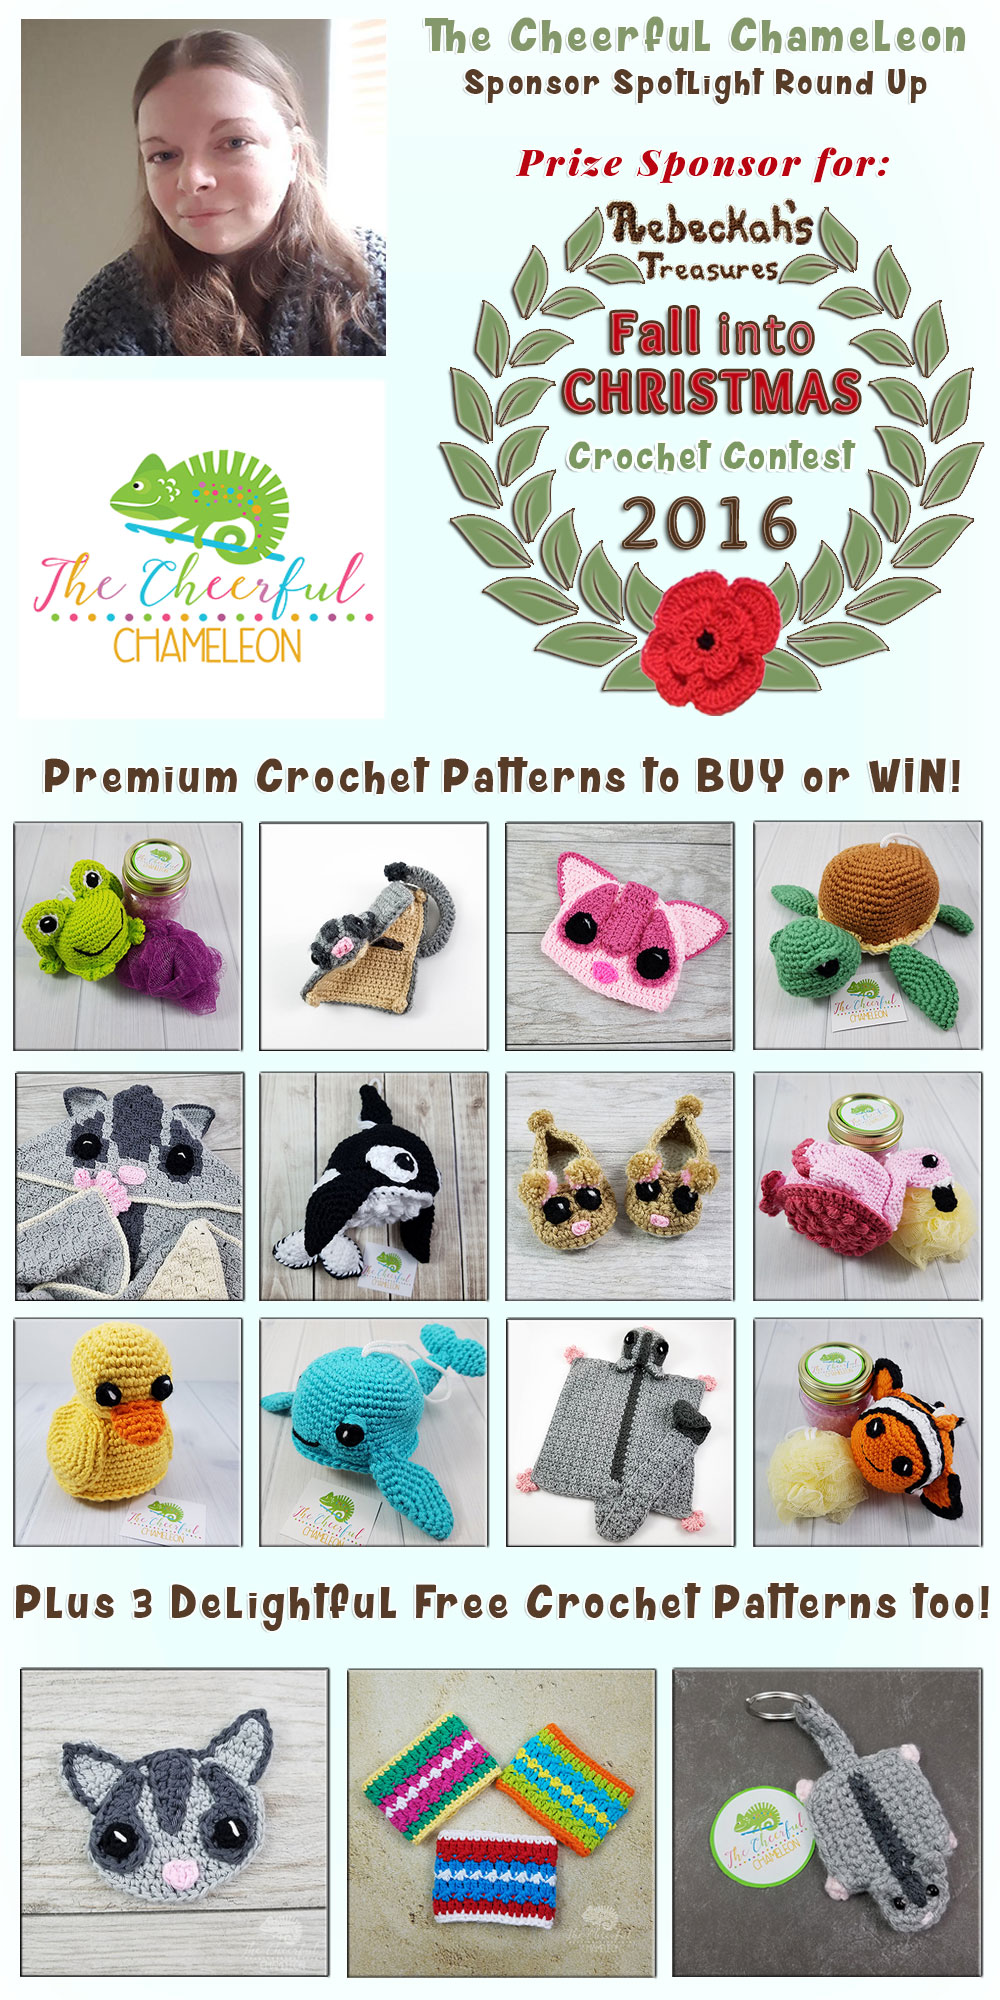 The Cheerful Chameleon - Sponsor Spotlight Round Up via @beckastreasures | 12 Premium + 3 #FREE Crochet Patterns by @The Cheerful Chameleon | #fallintochristmas2016 #crochetcontest #spotlight #crochet #roundup